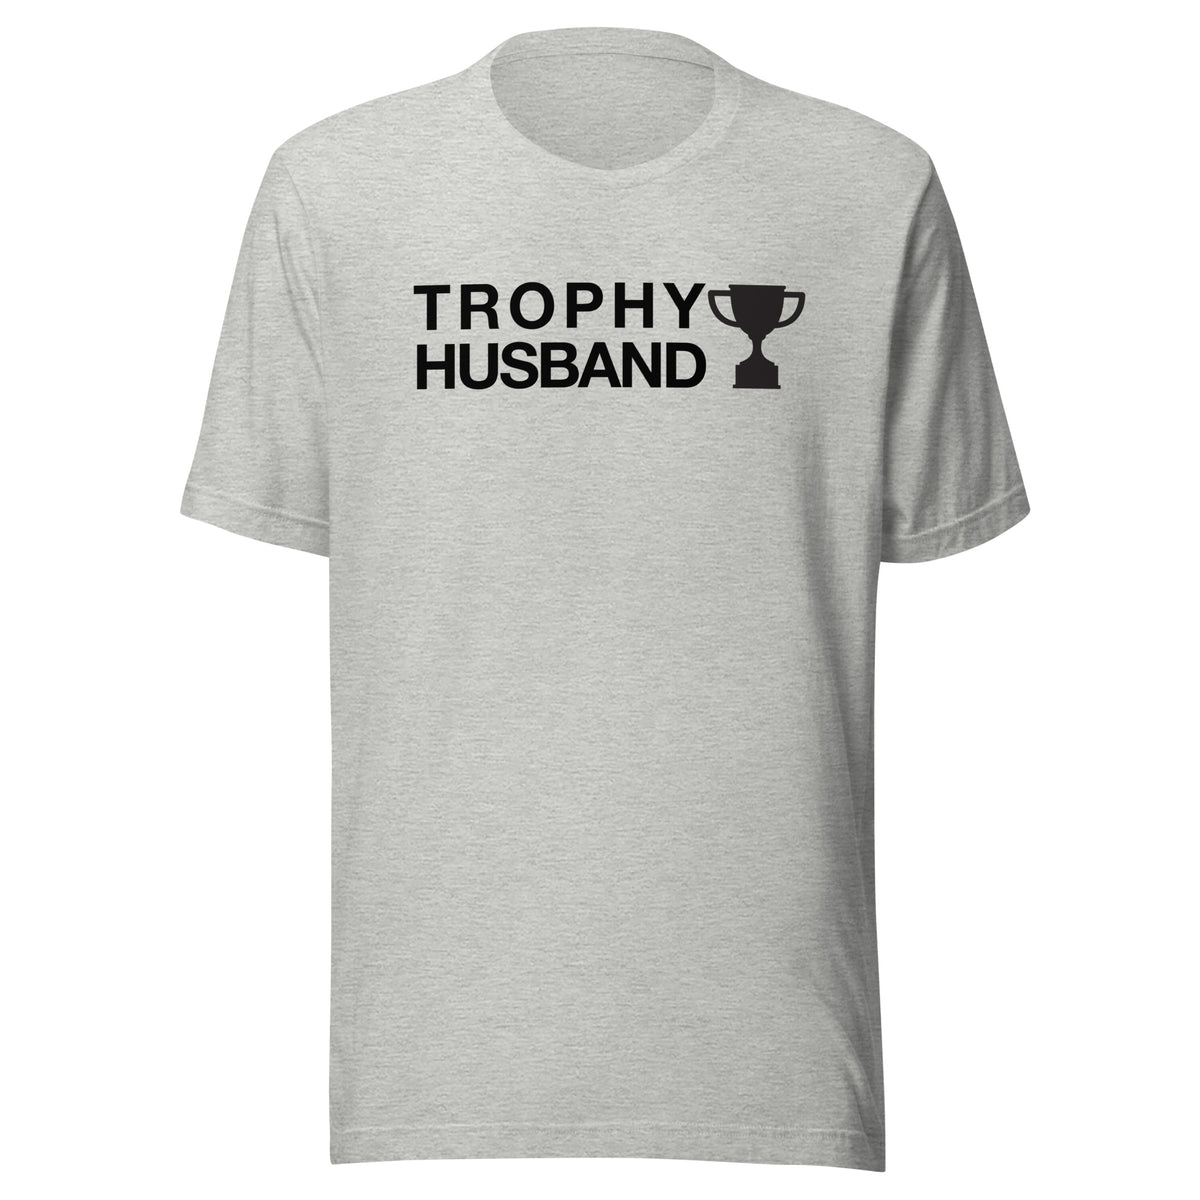 SNEAKER THRONE Trophy Husband